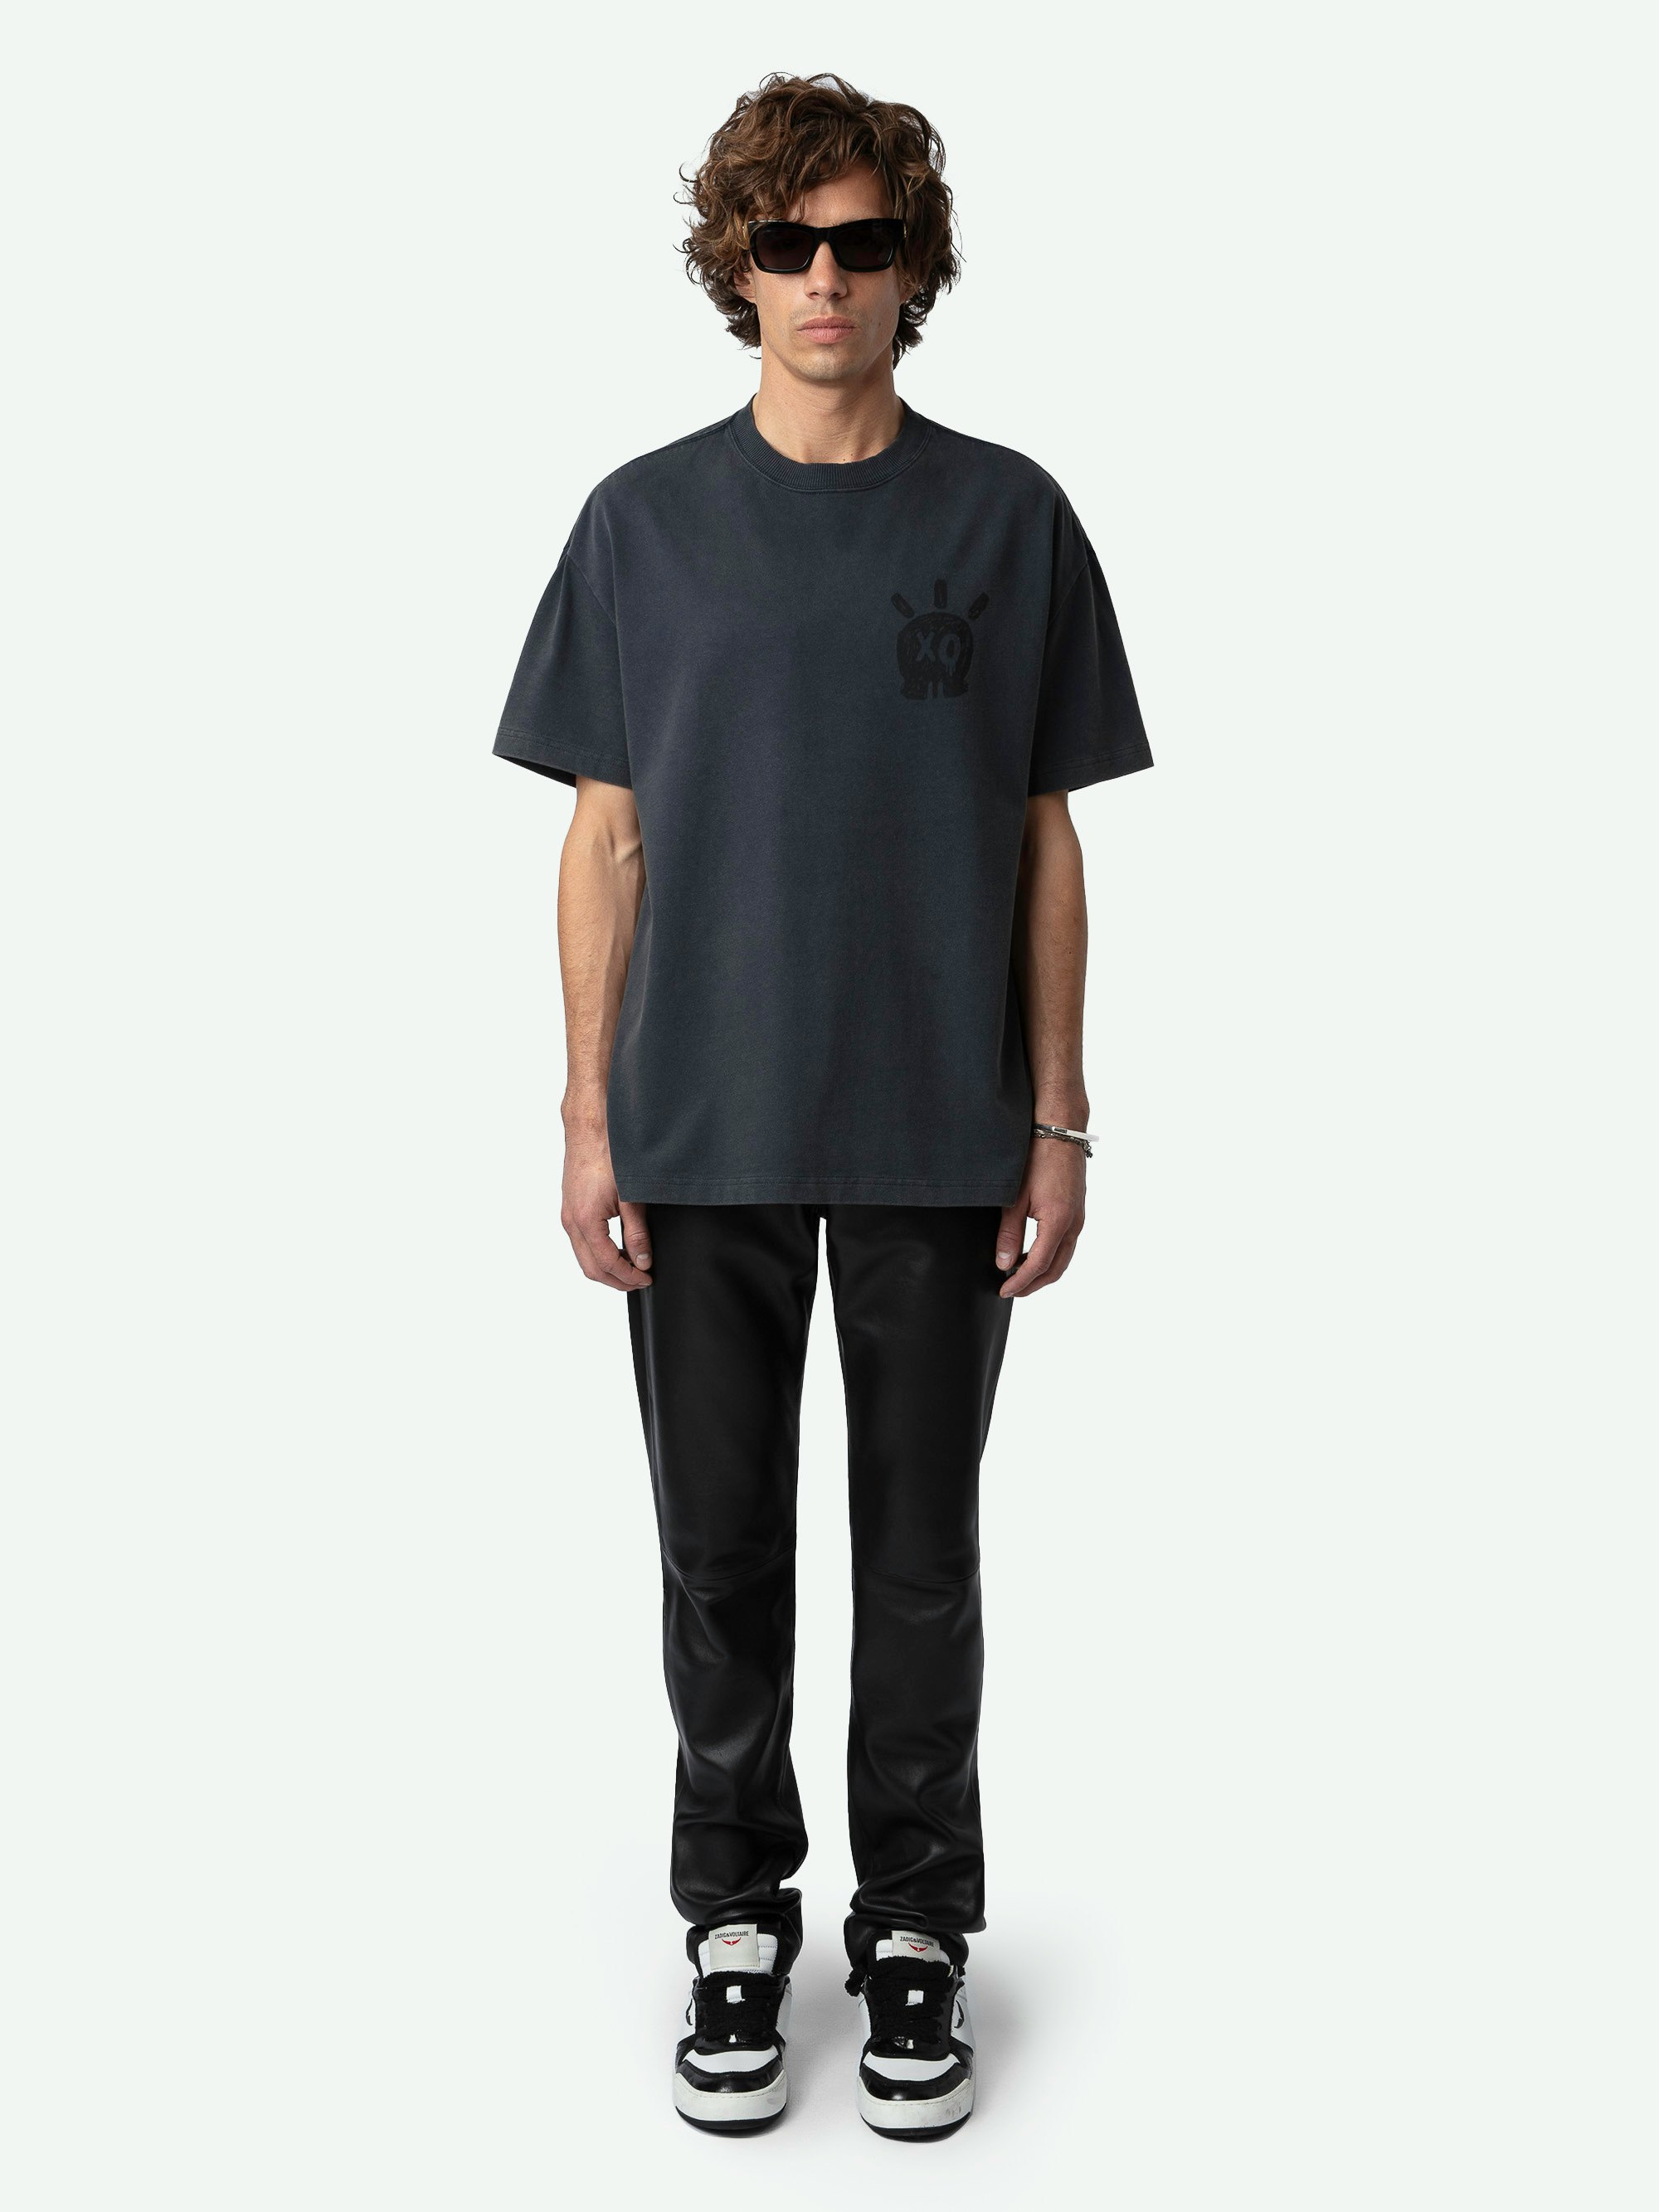 Teddy Skull T-shirt - Short-sleeved oversized organic cotton T-shirt with XO Skull print on the front.